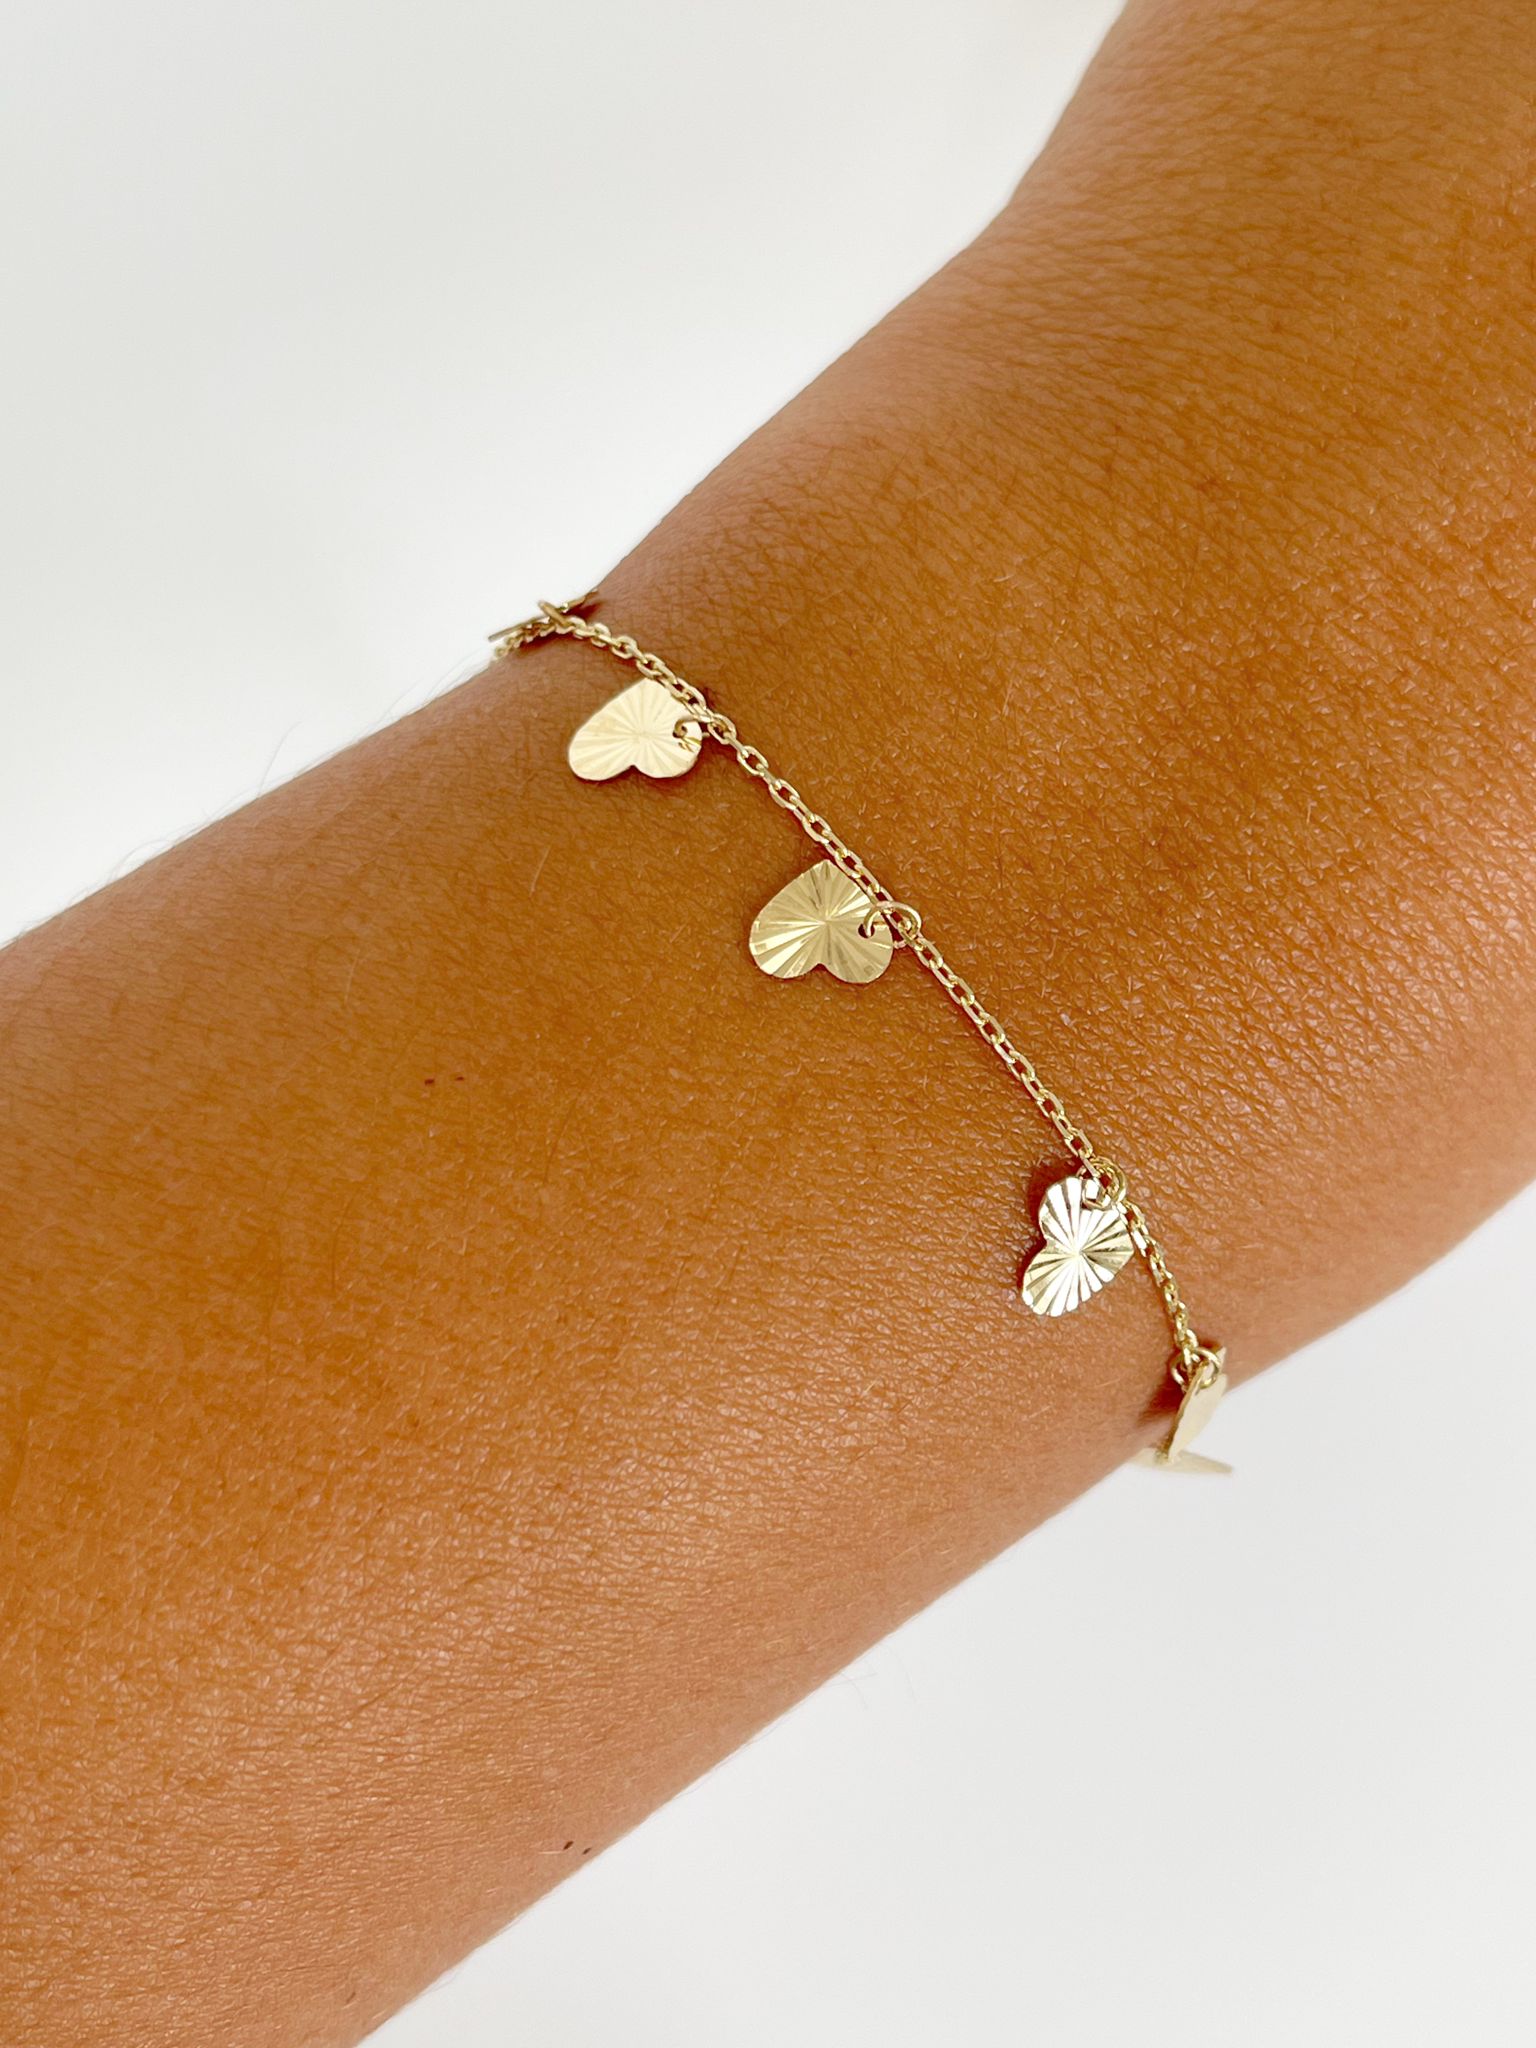 Infinity love gold bracelet